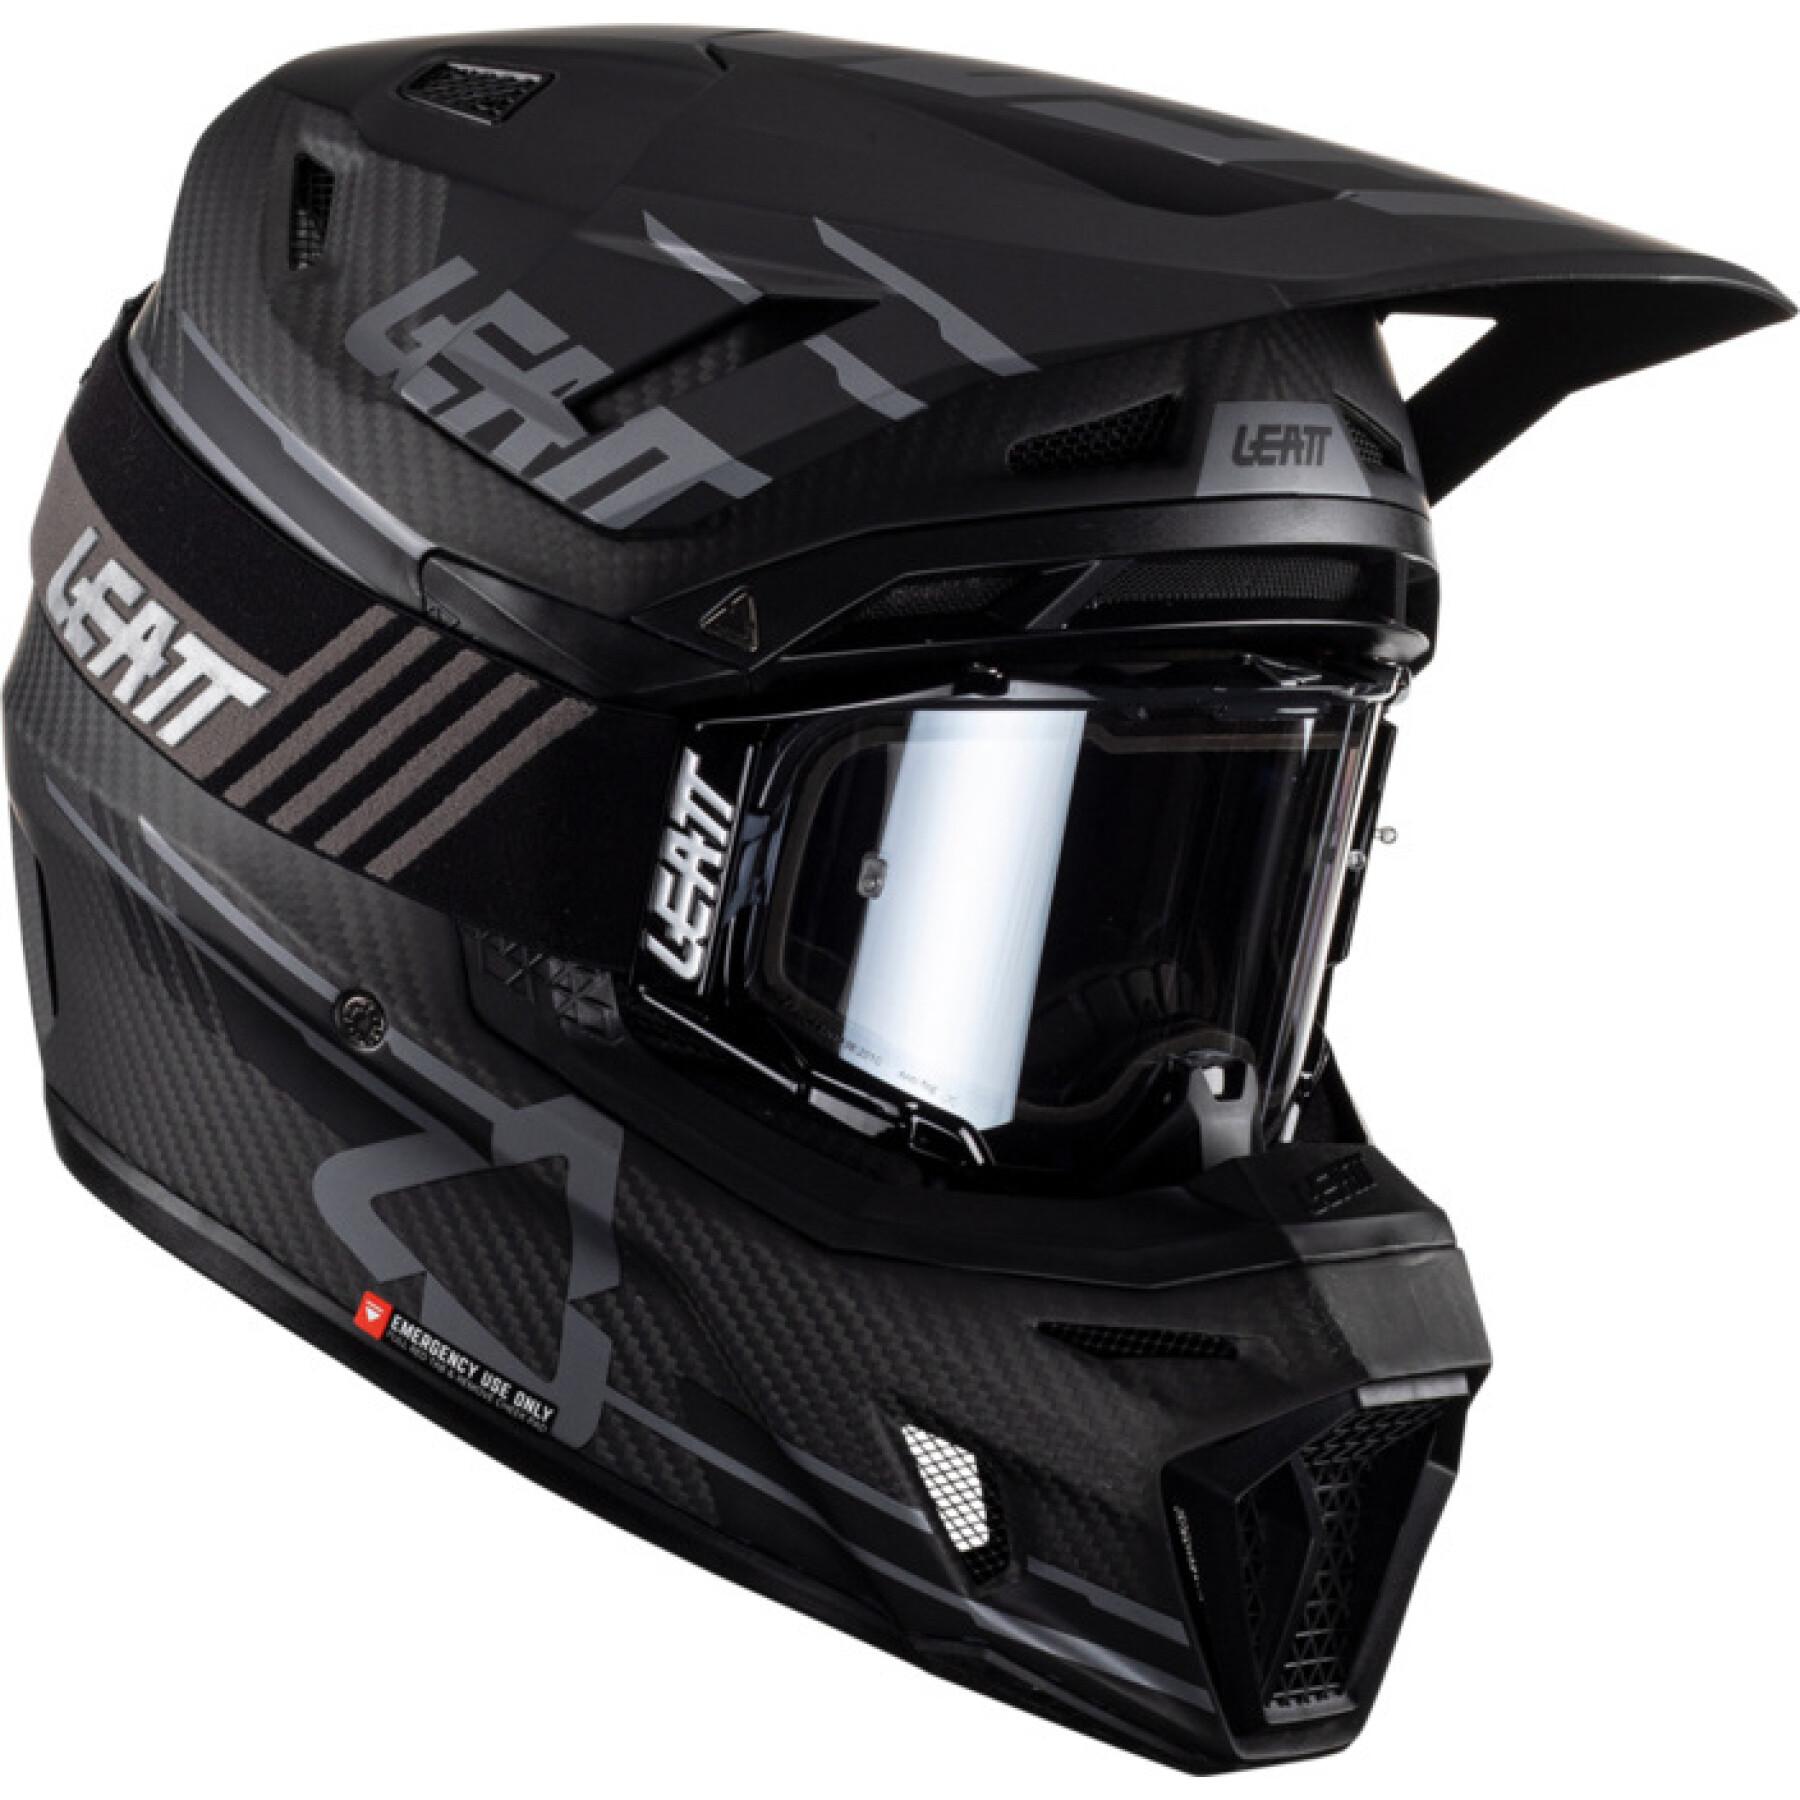 Motorcycle helmet kit with glasses Leatt 9.5 28